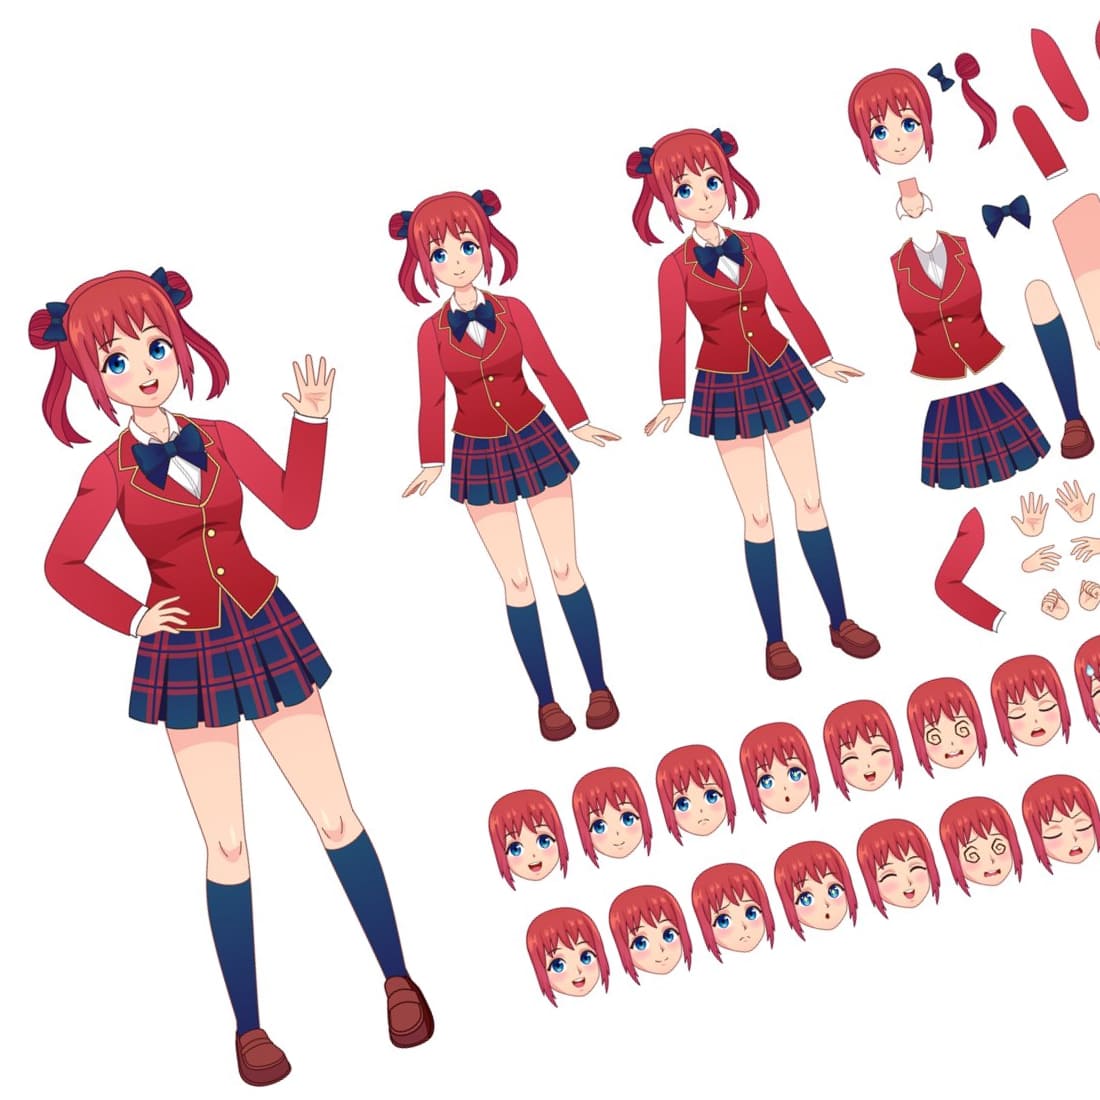 Anime Girls Character Kit. Cartoon School Girl Uniform In Japanese Style Cover.